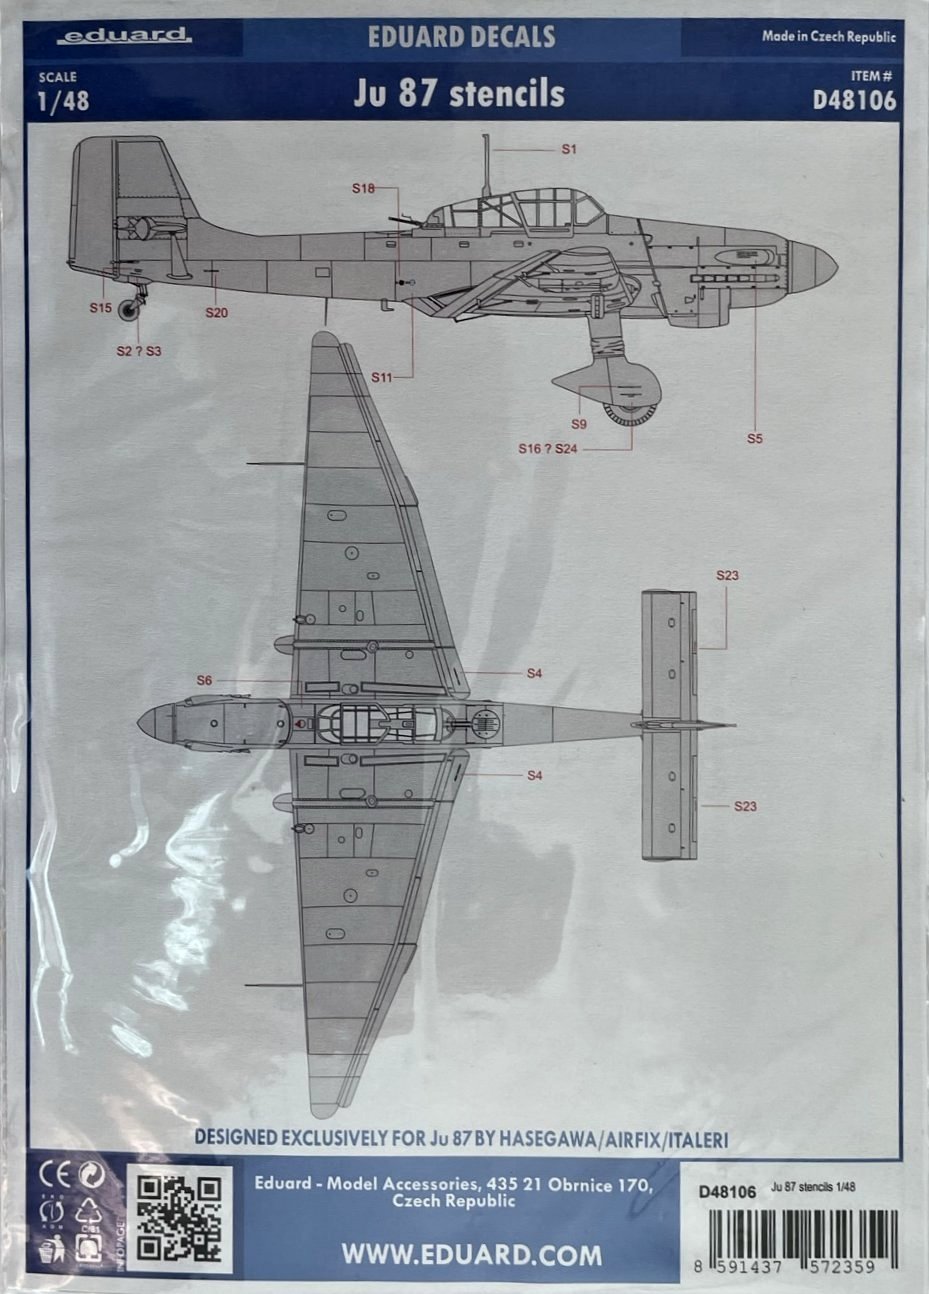 1/48 Decals Ju 87 stencils (HAS/AIR/ITAL)